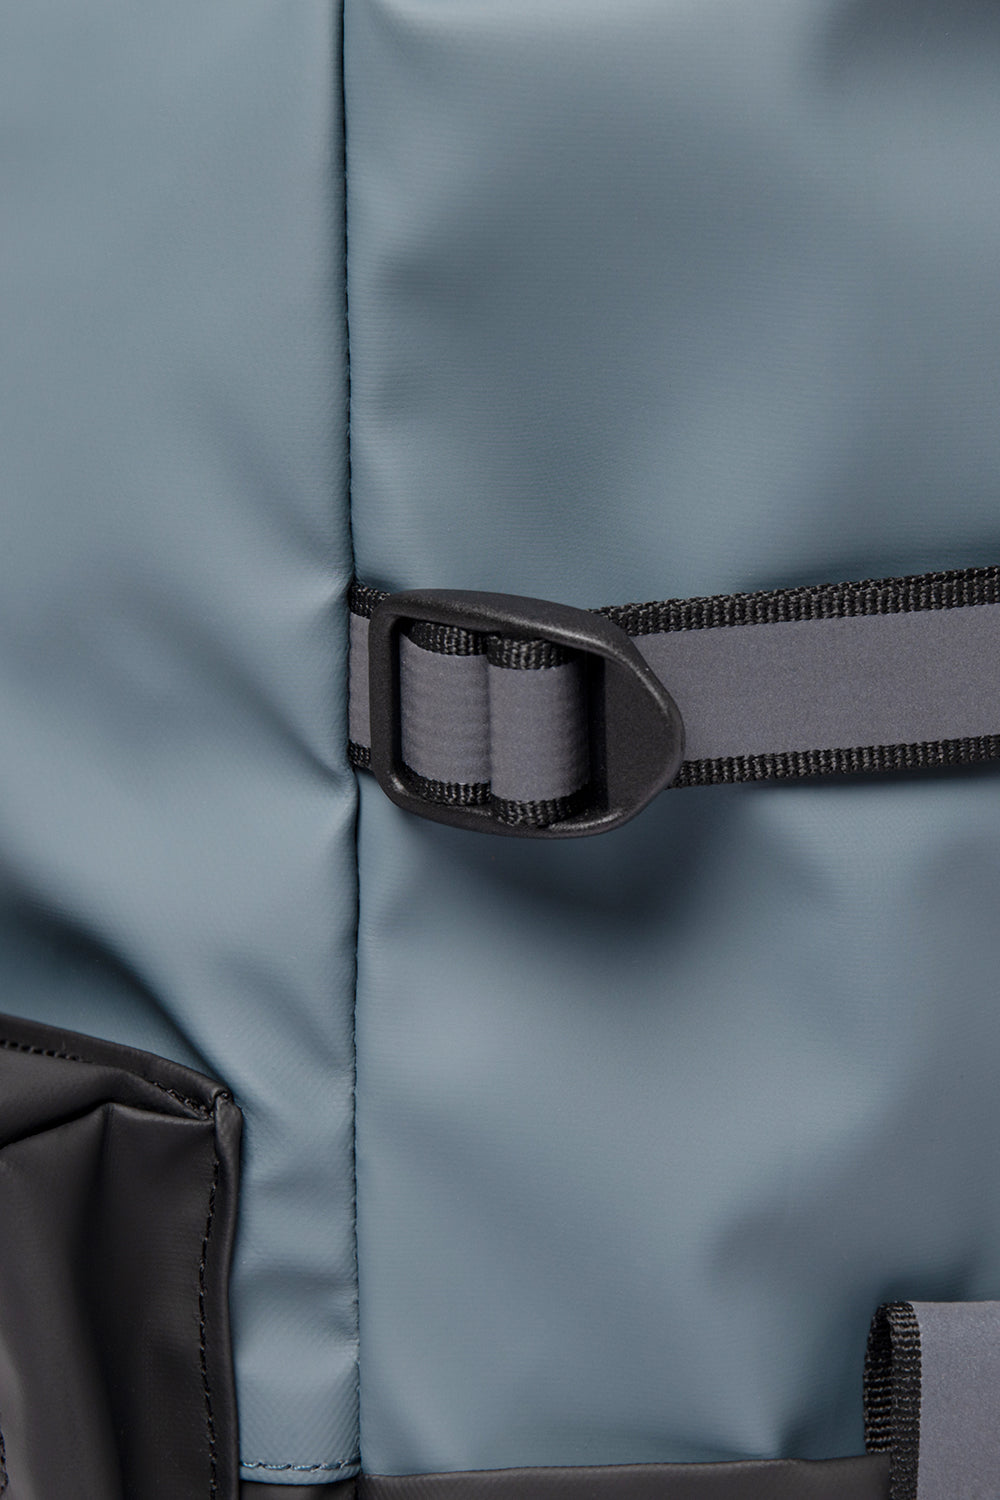 Sandqvist Ruben 2.0 Water-Resistant Rolltop Backpack (Multi Blue / Steel Blue)